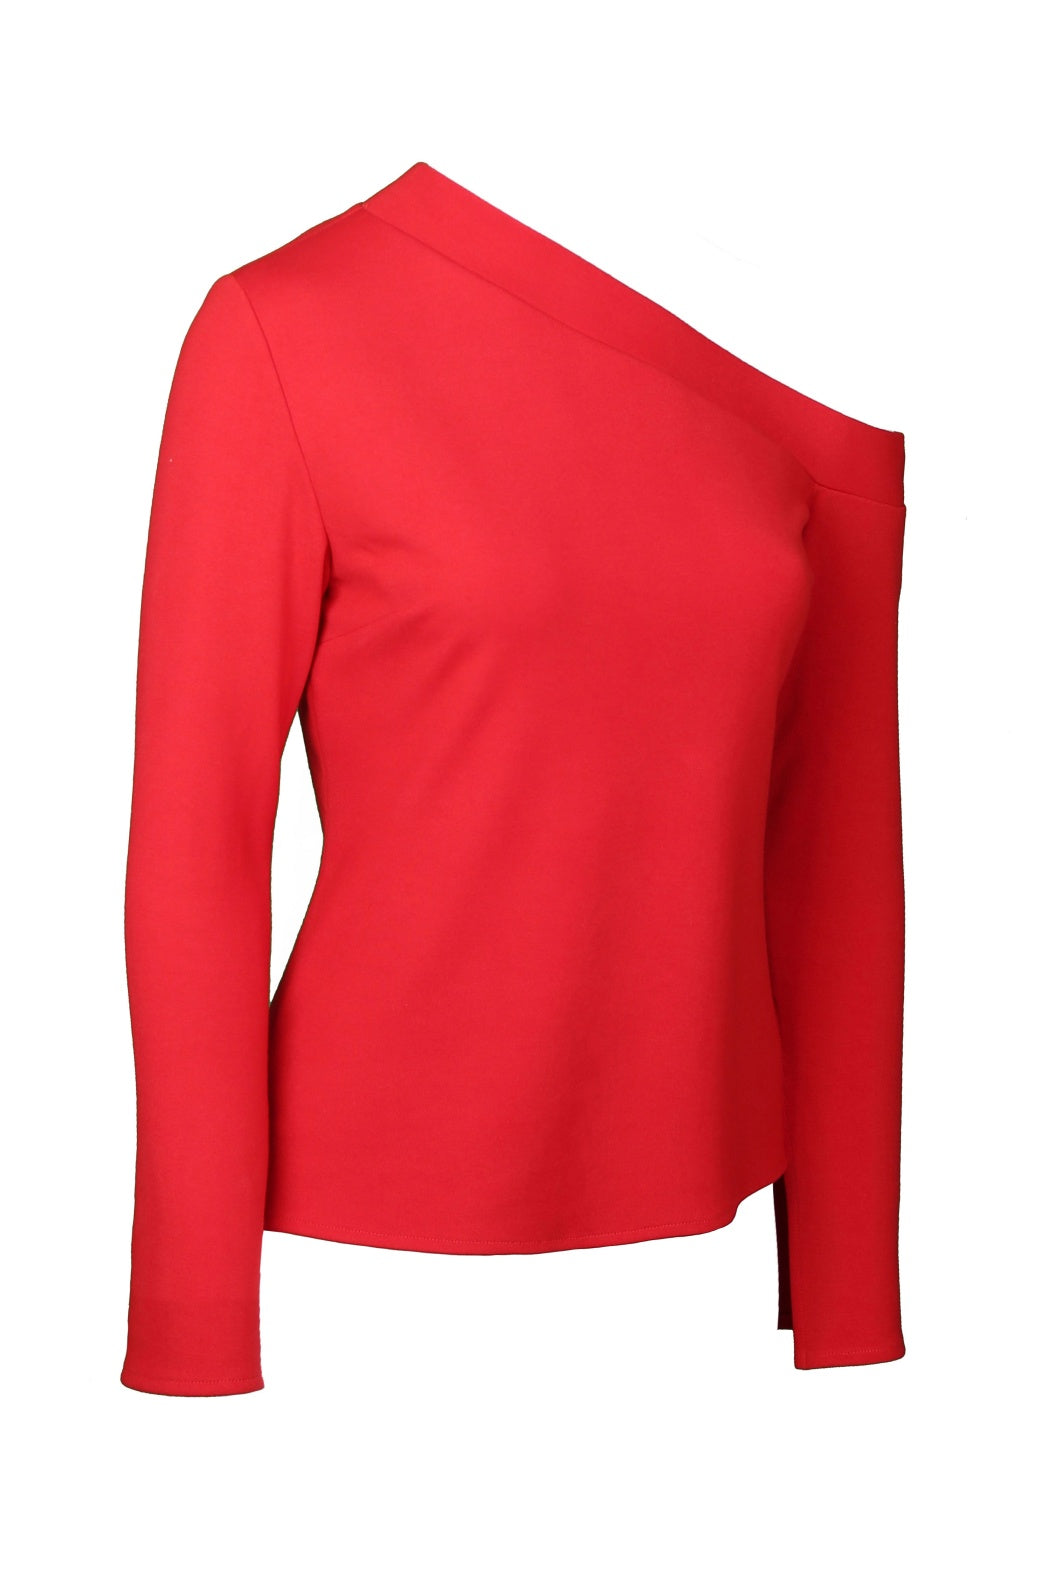 Niki Red One-Shoulder Knitwear Blouse